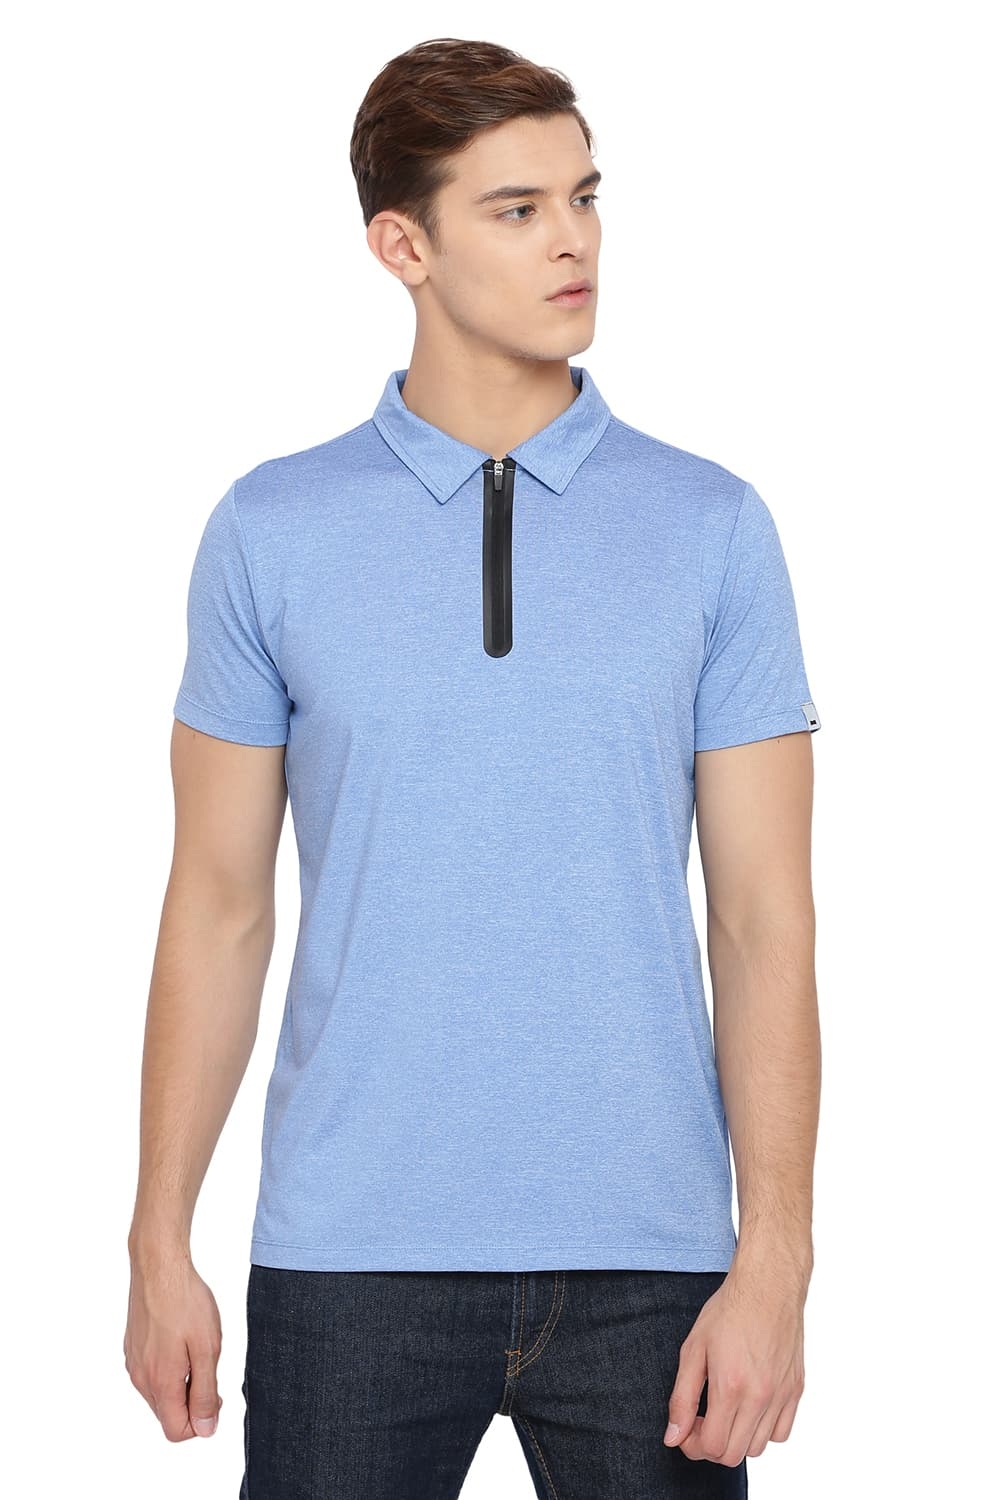 BASICS | Basics Muscle Fit Marina Blue Polo T Shirt